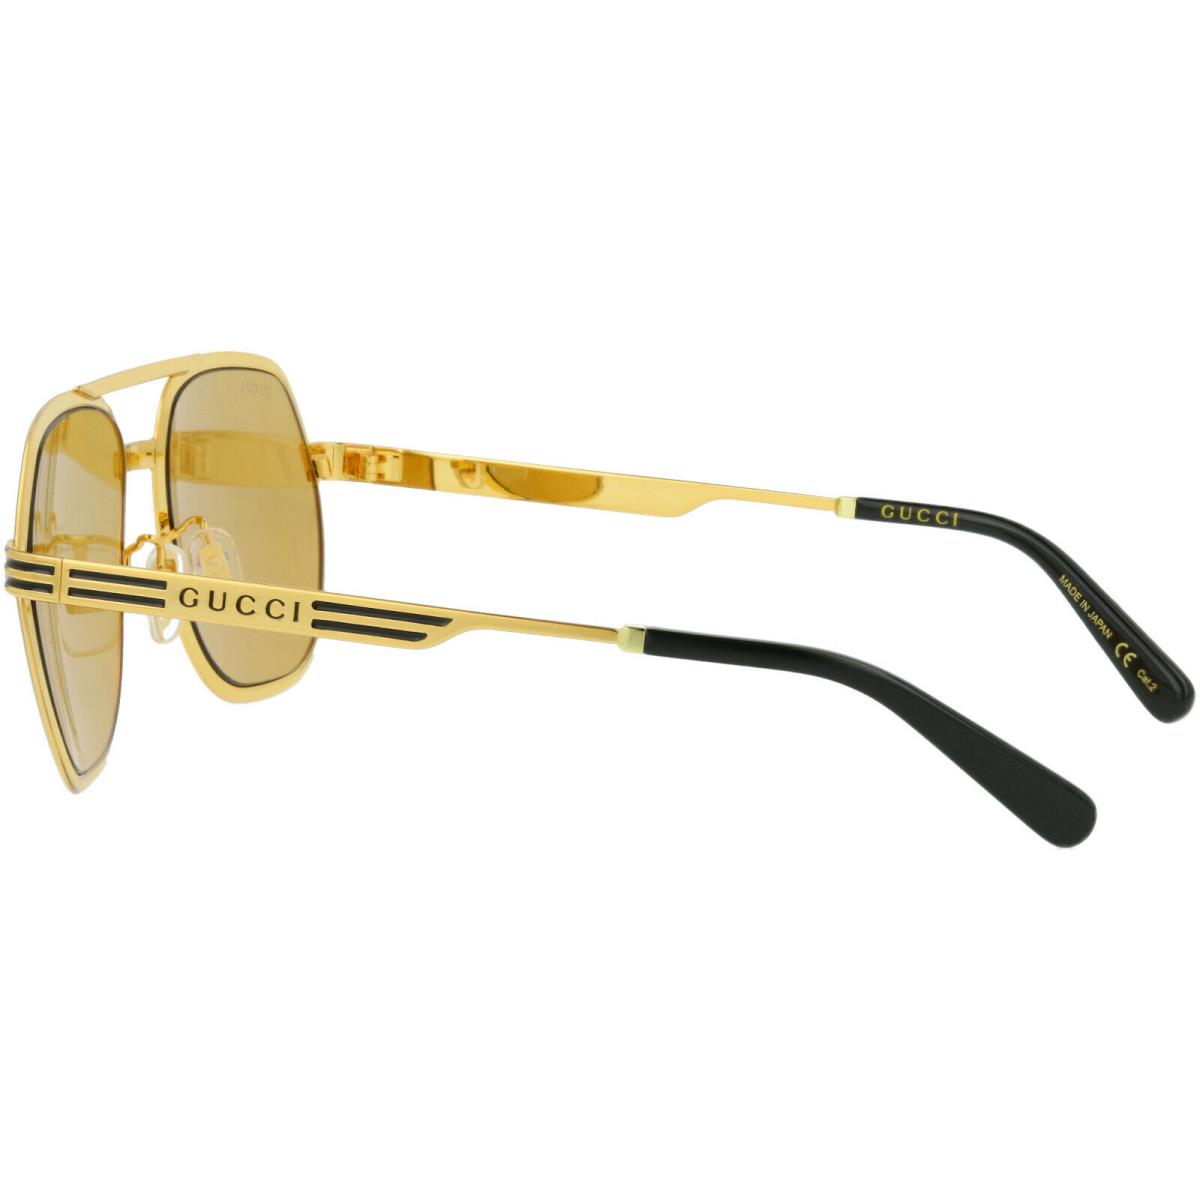 Gucci sunglasses  - Gold Frame, Gold Lens 1